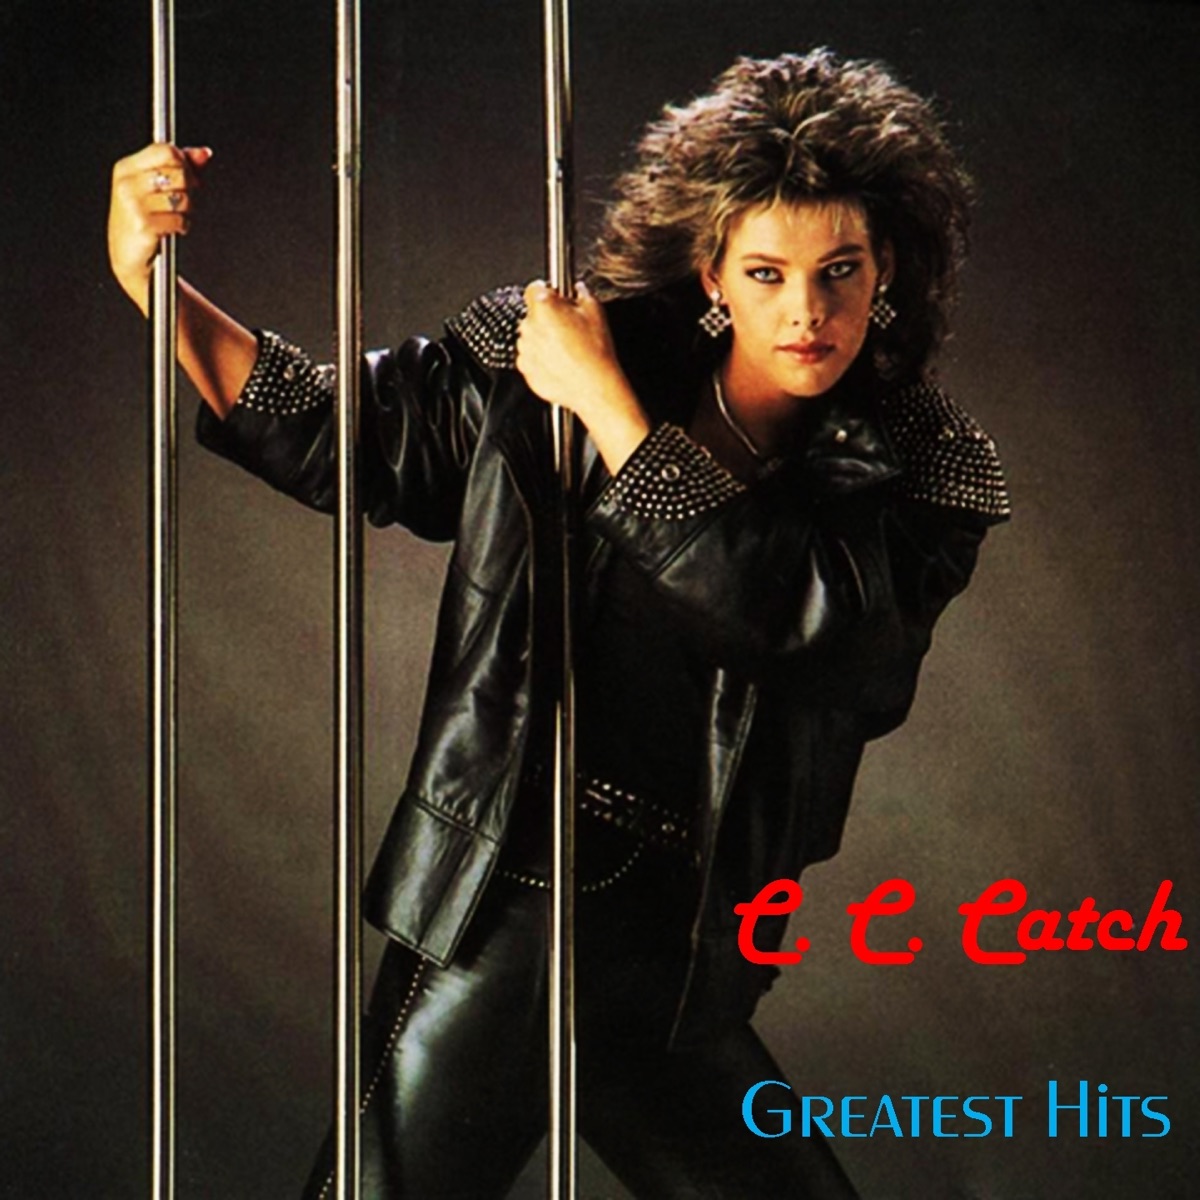 Greatest Hits - Album by C.C. Catch - Apple Music